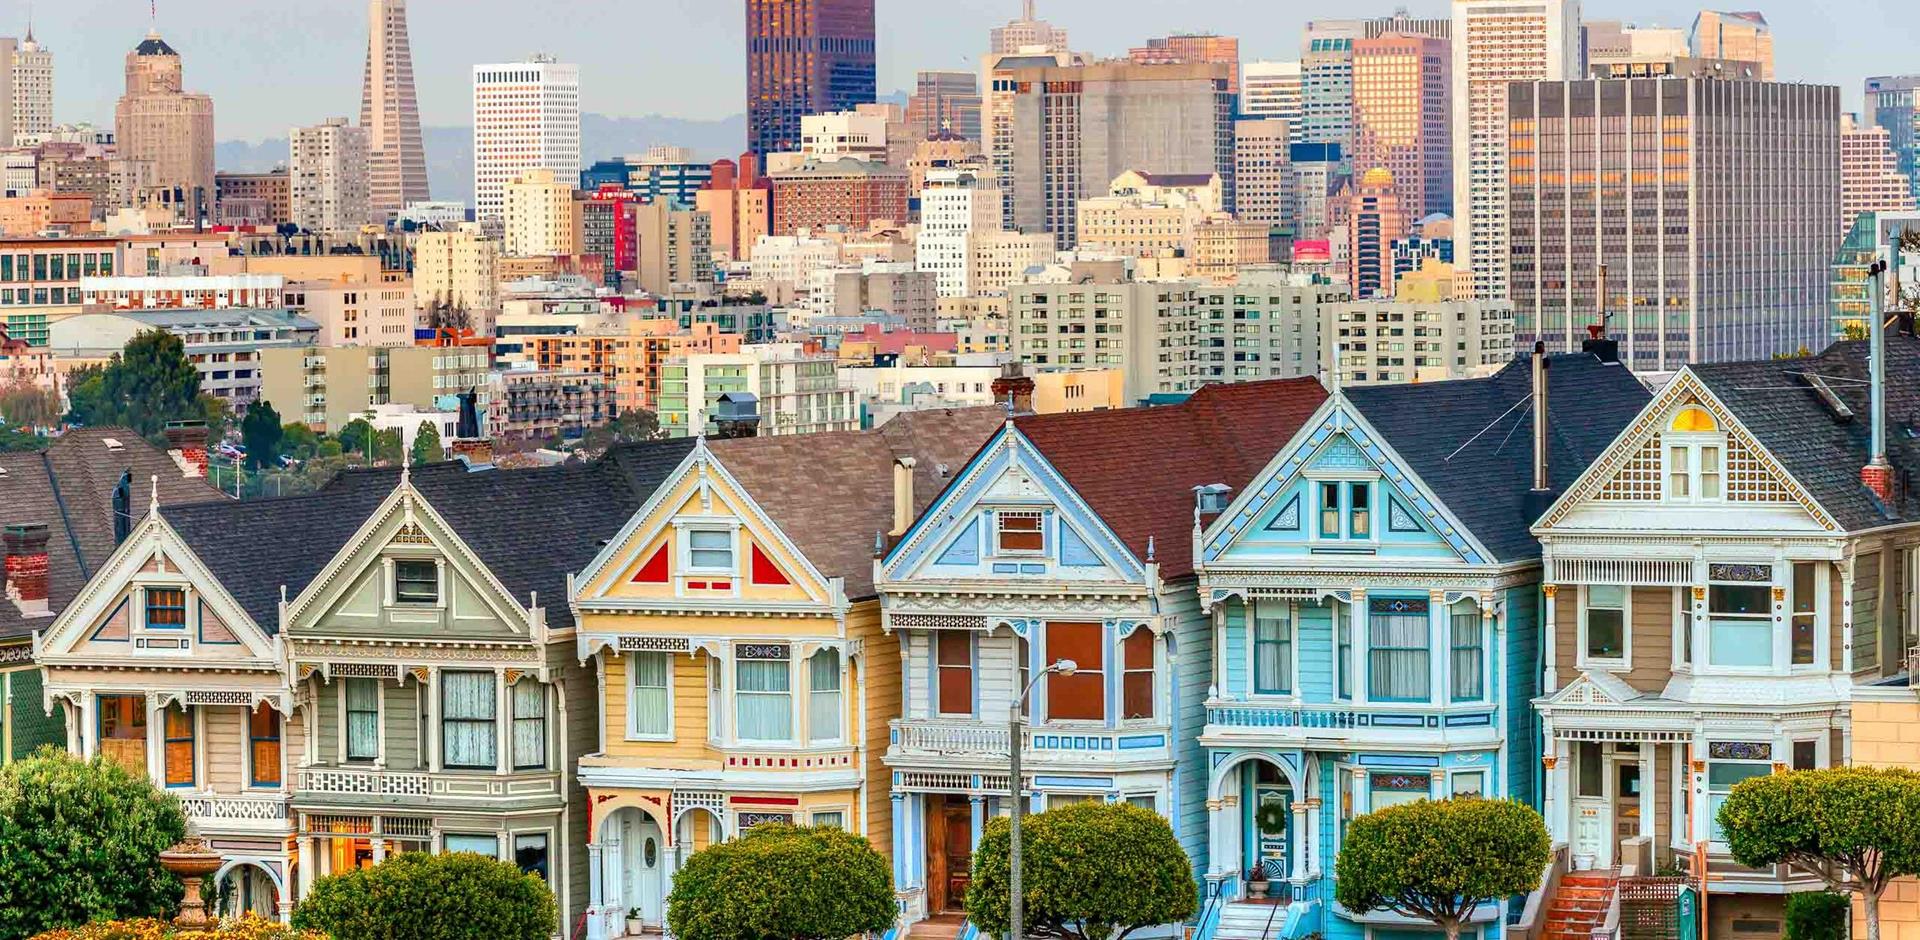 California-San Francisco skyline and Bay Bridge